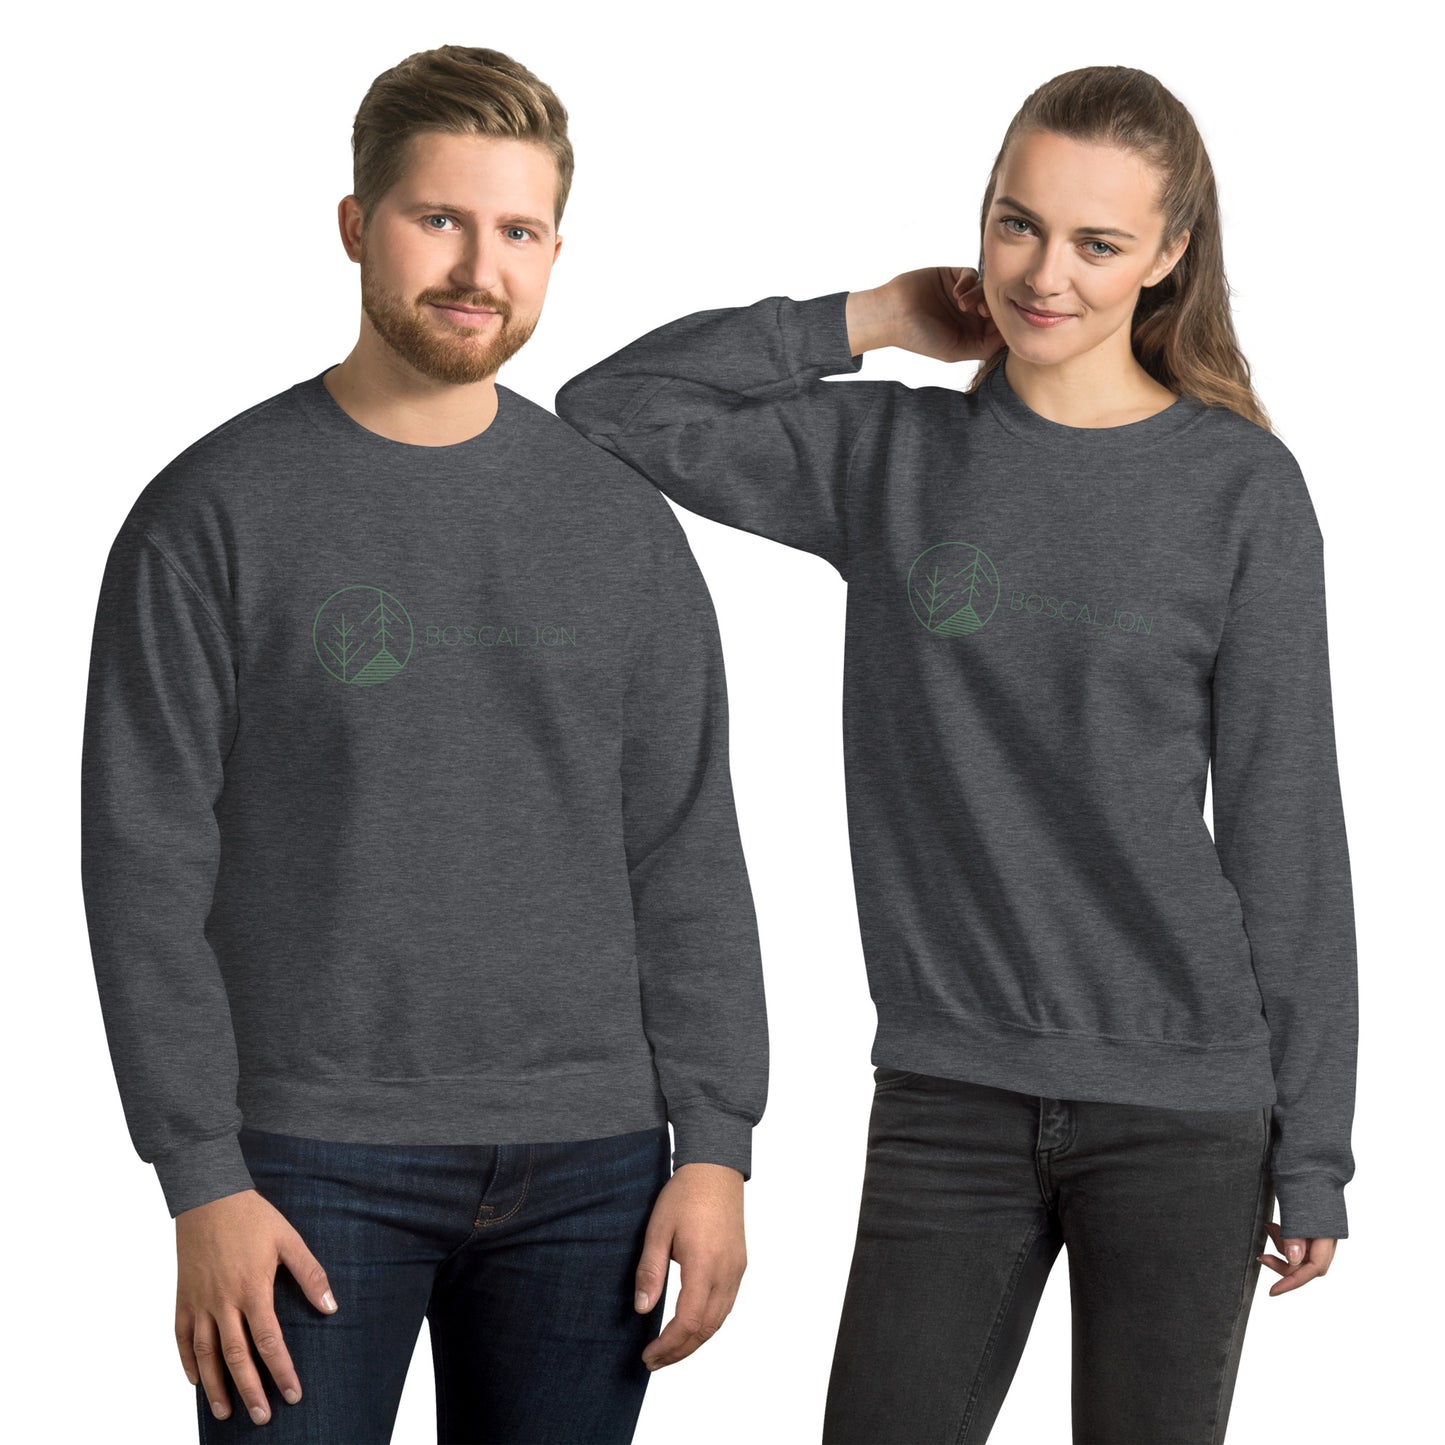 Boscaljon Design Co Unisex Sweatshirt